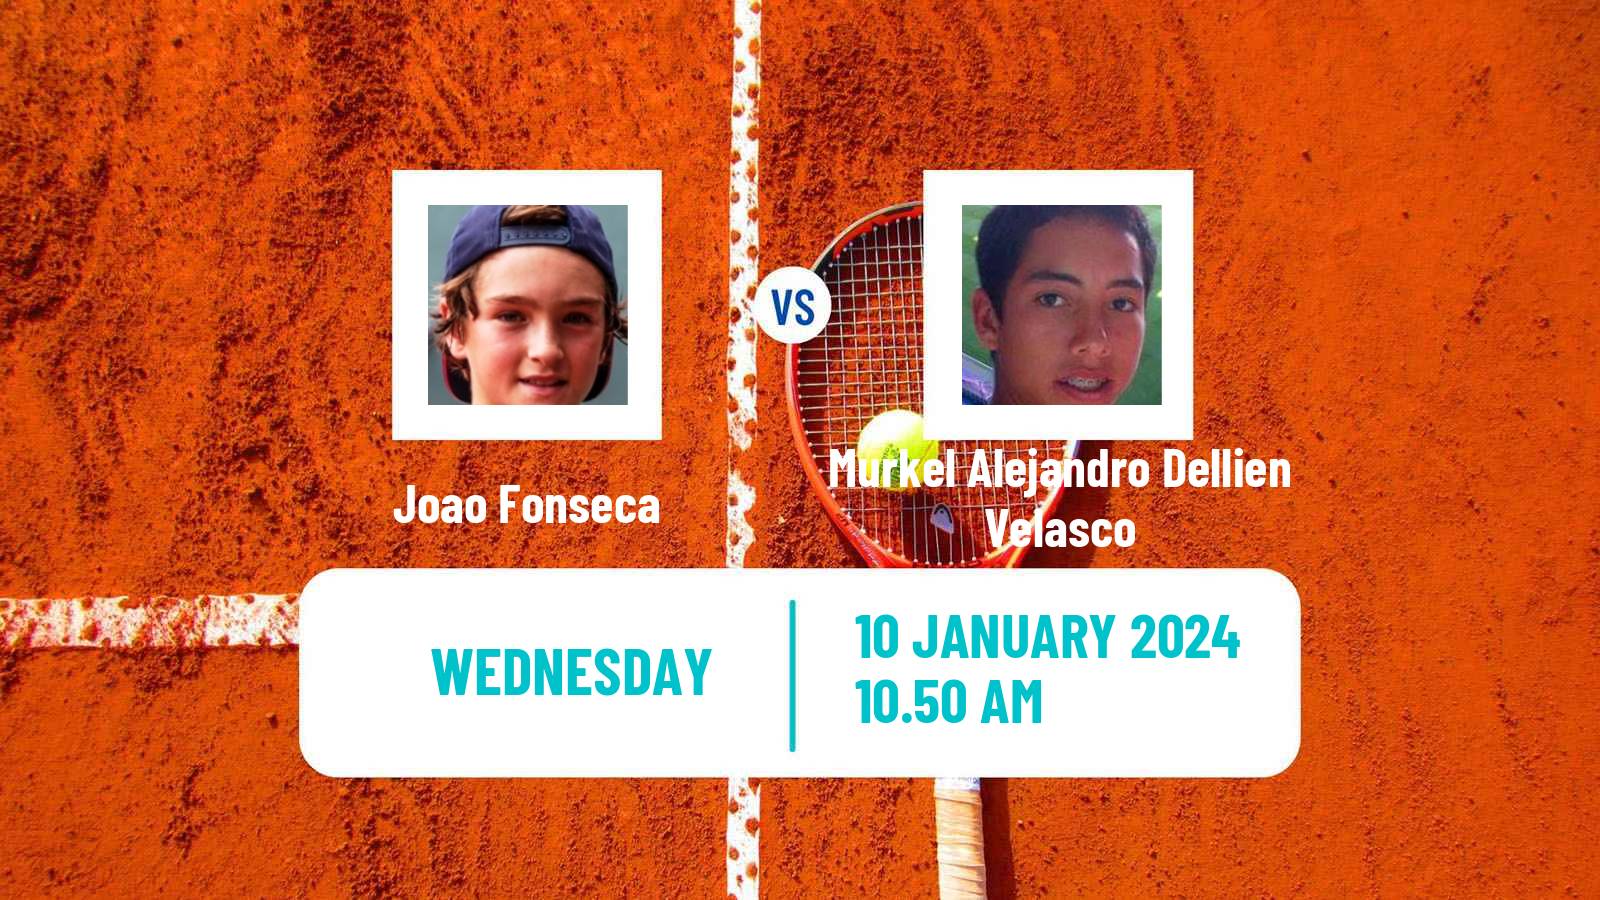 Tennis Buenos Aires Challenger Men Joao Fonseca - Murkel Alejandro Dellien Velasco